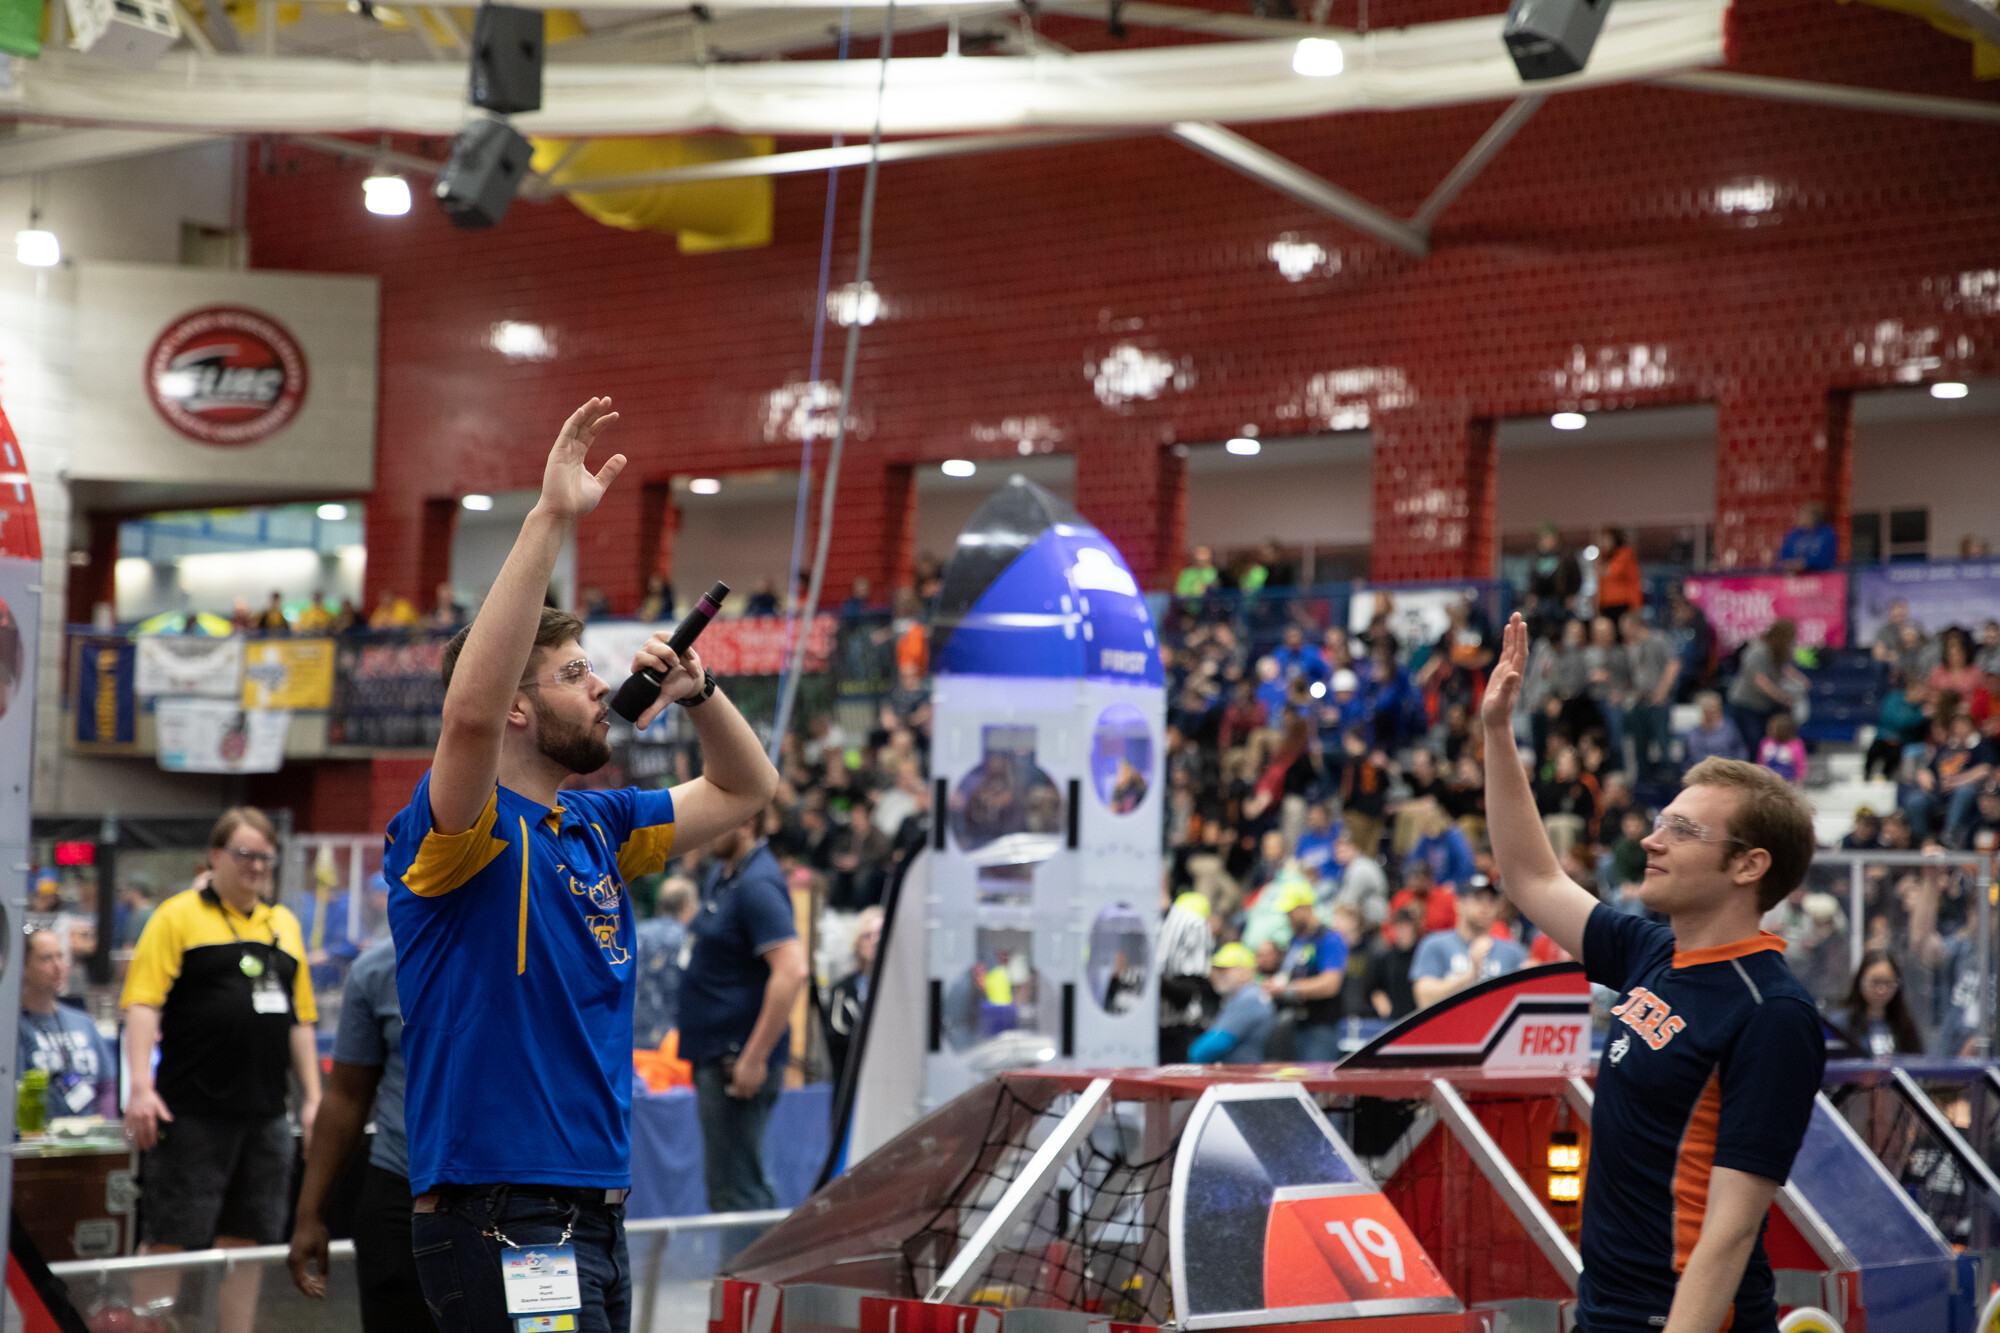 FIRST Robotics state championship returns to SVSU, bringing 1 million